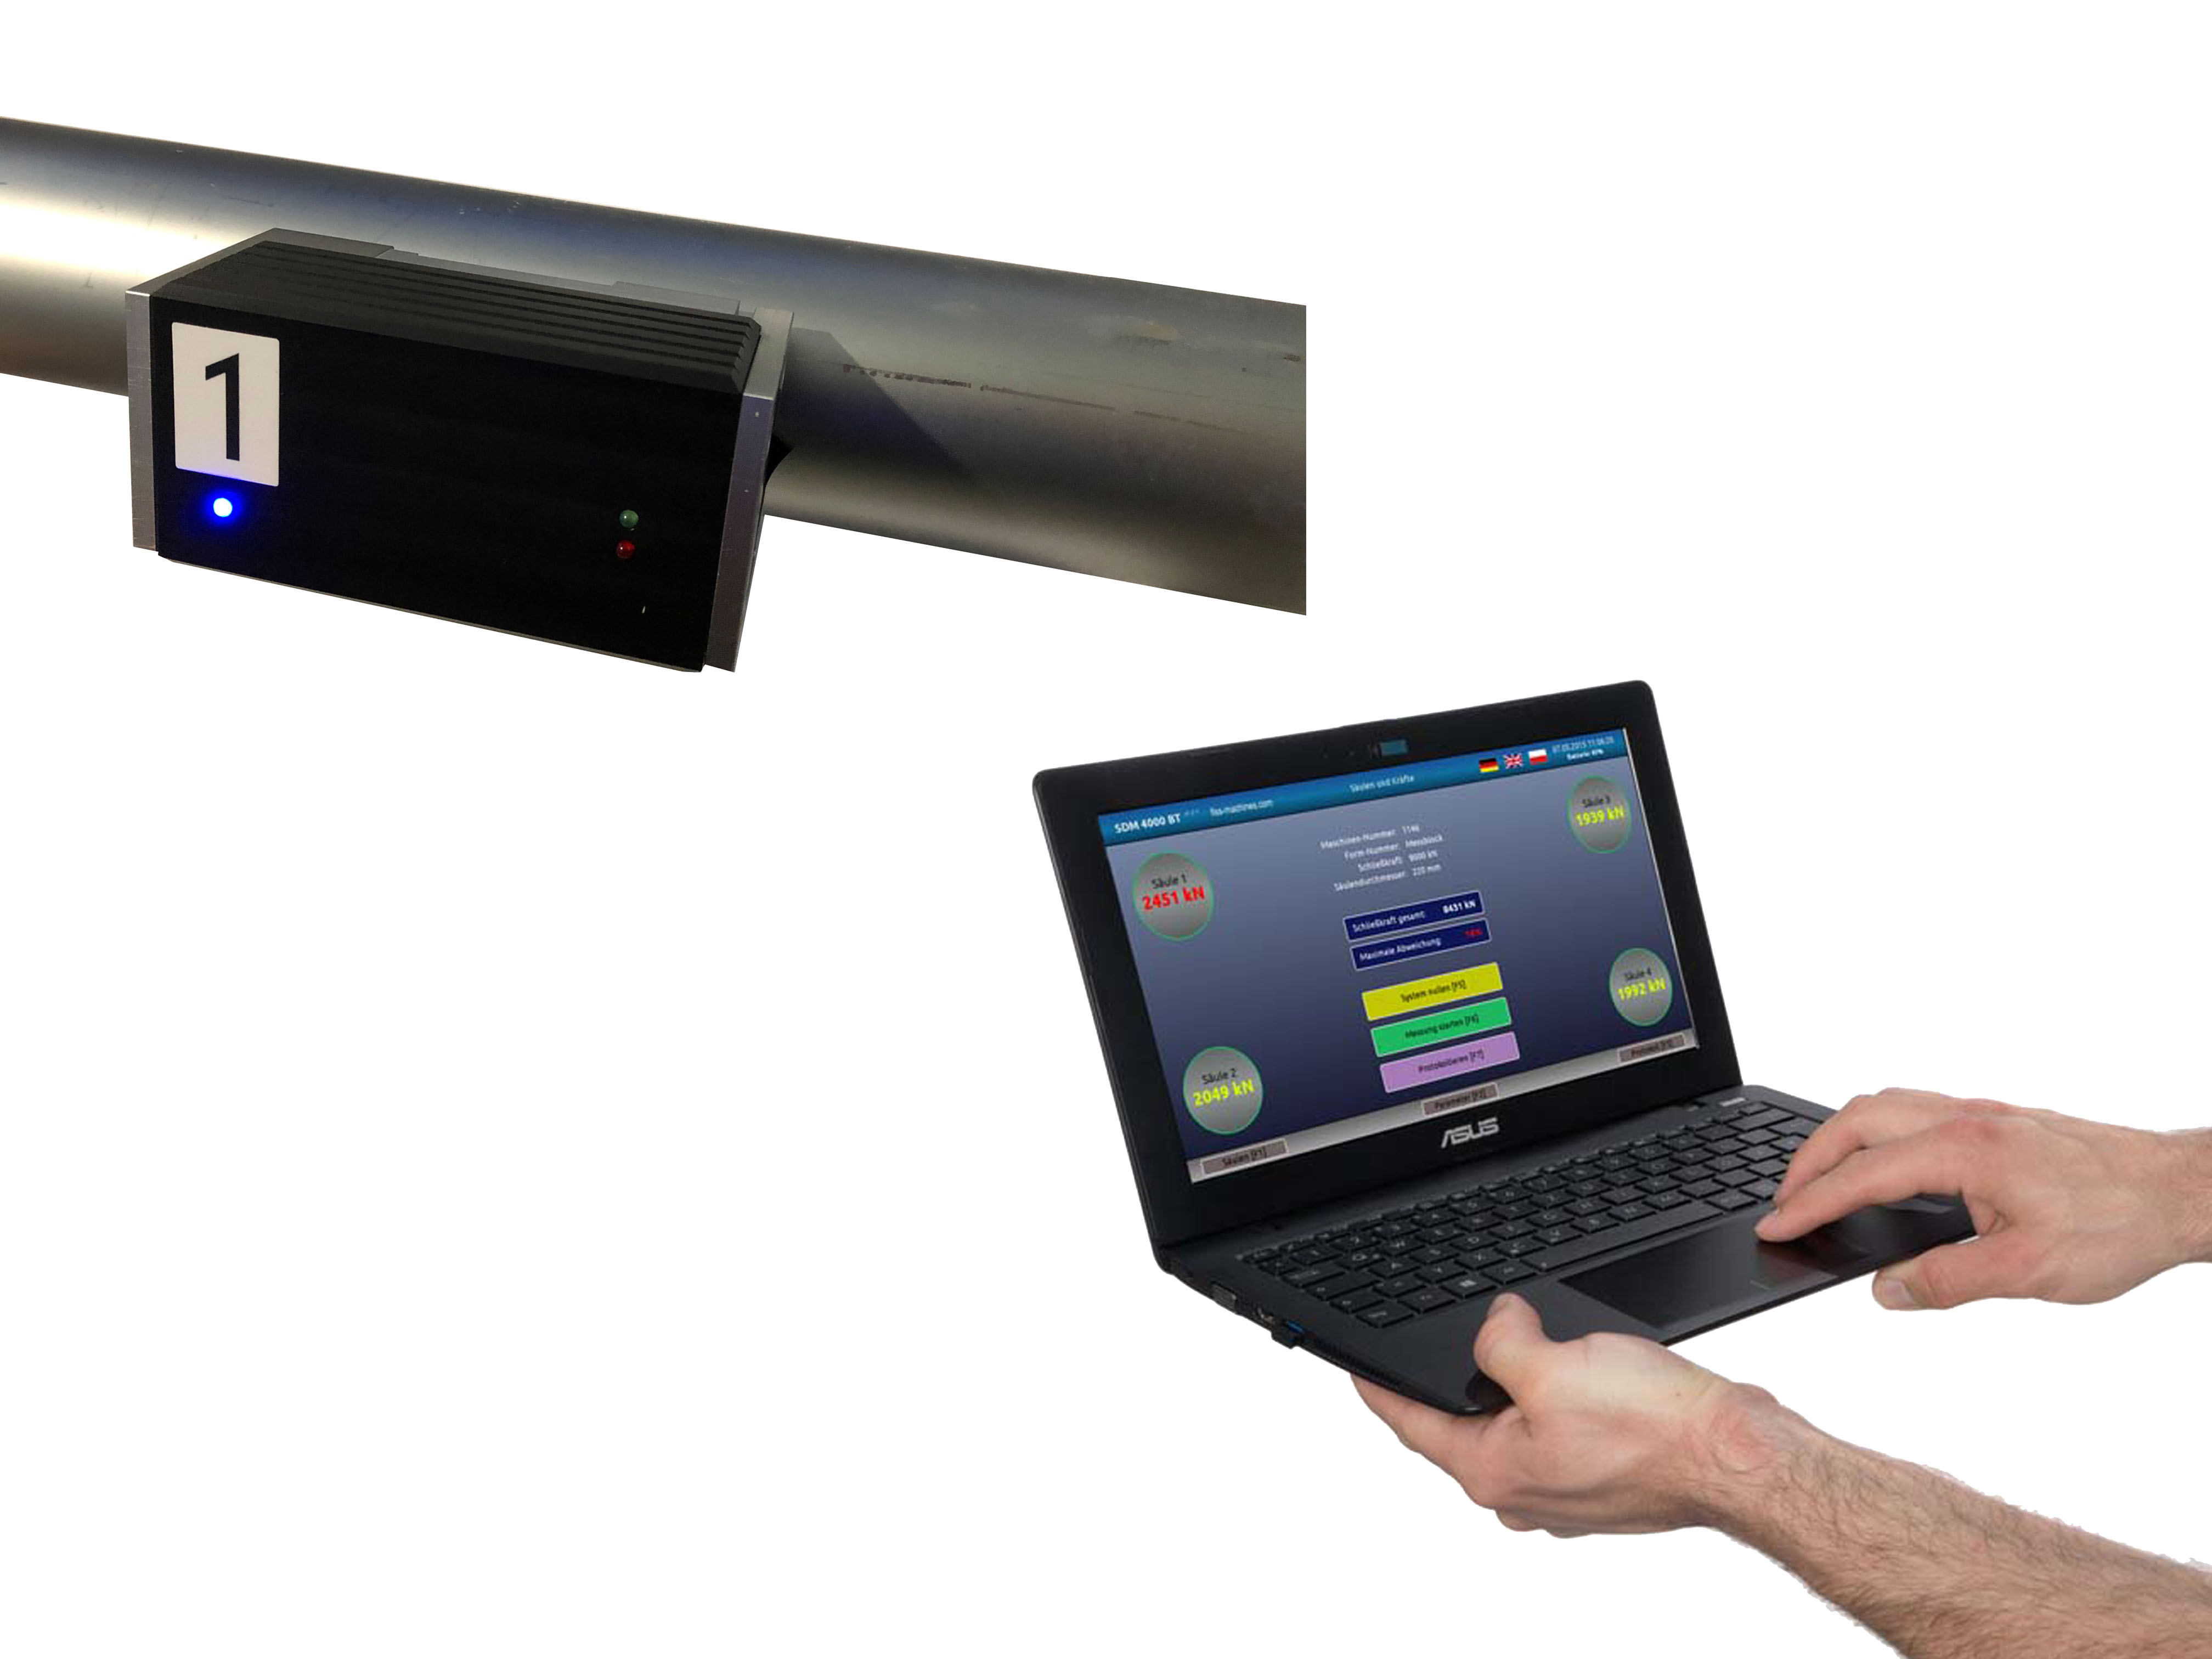 SDM 4000 RS-1 smart Tie Bar Measuring System Wireless